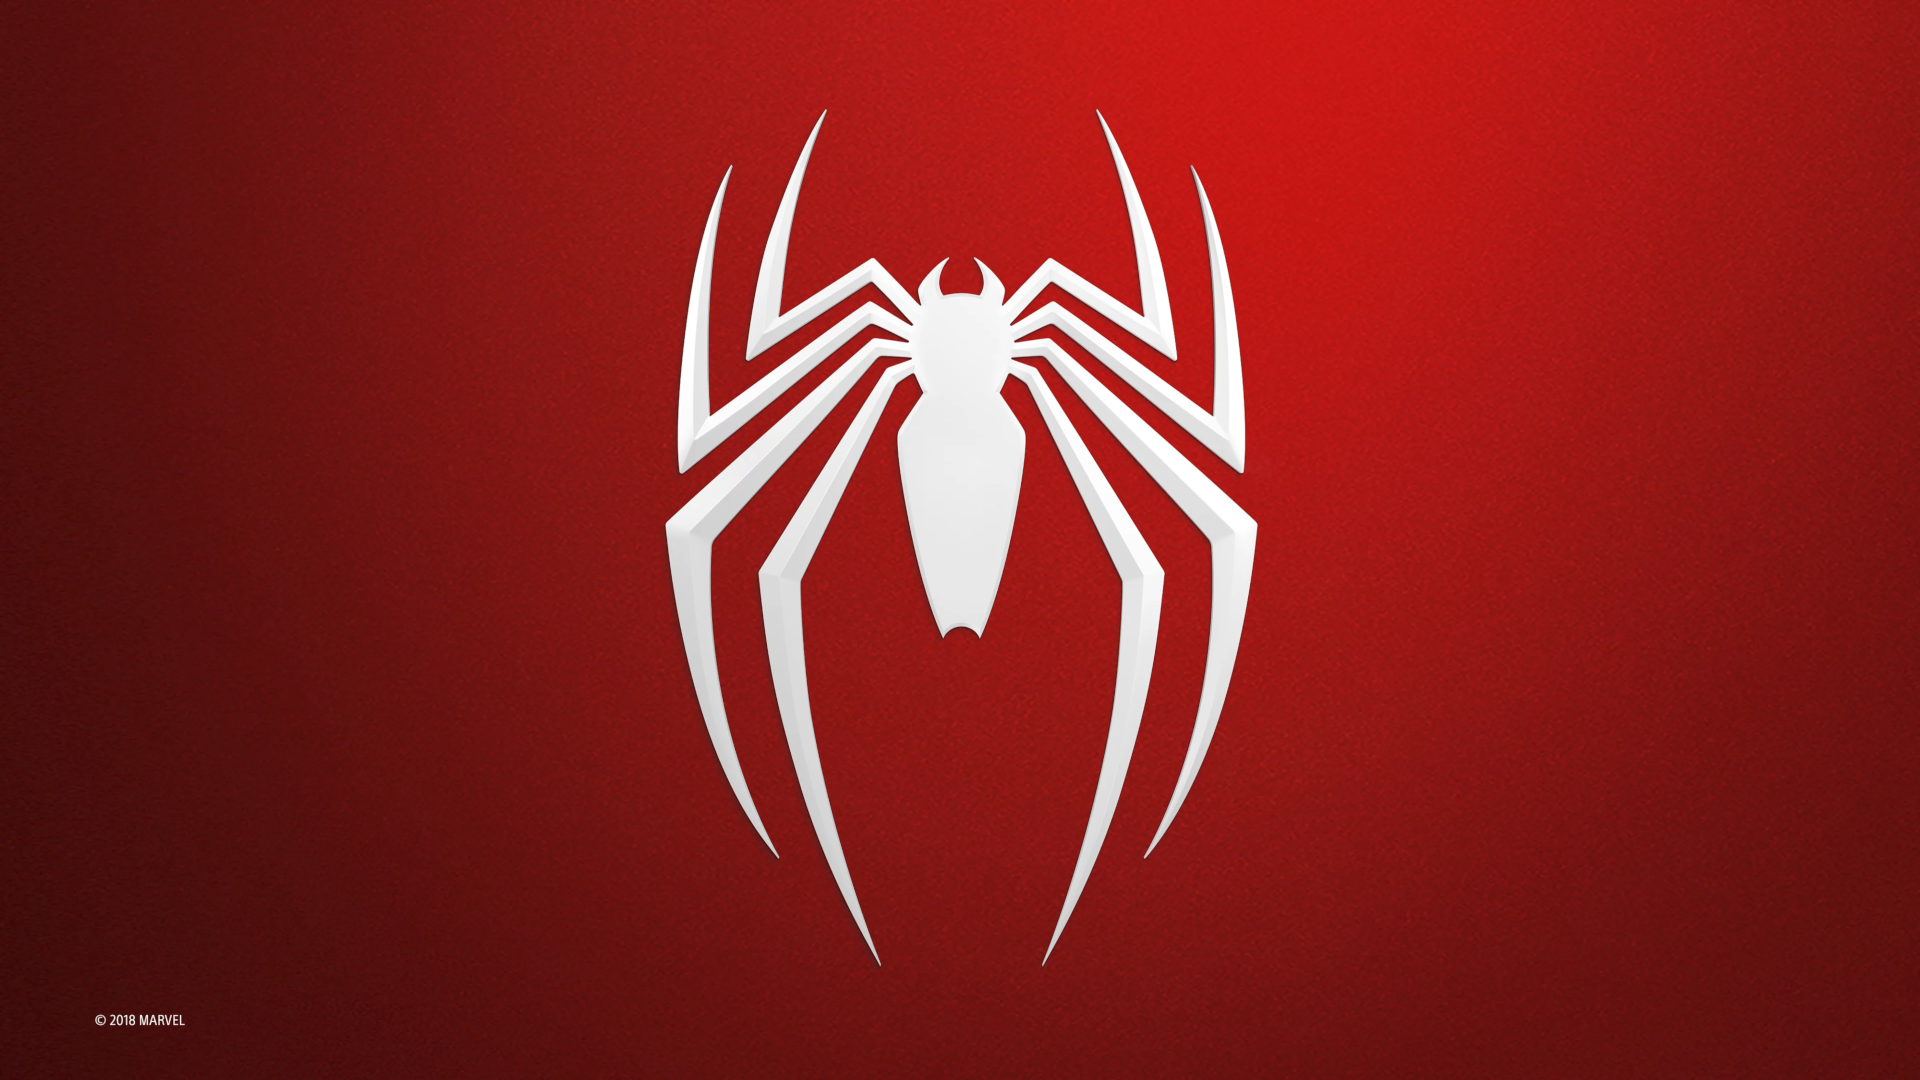 General 1920x1080 Spider-Man Spider-Man (2018) simple background minimalism logo superhero Marvel Comics